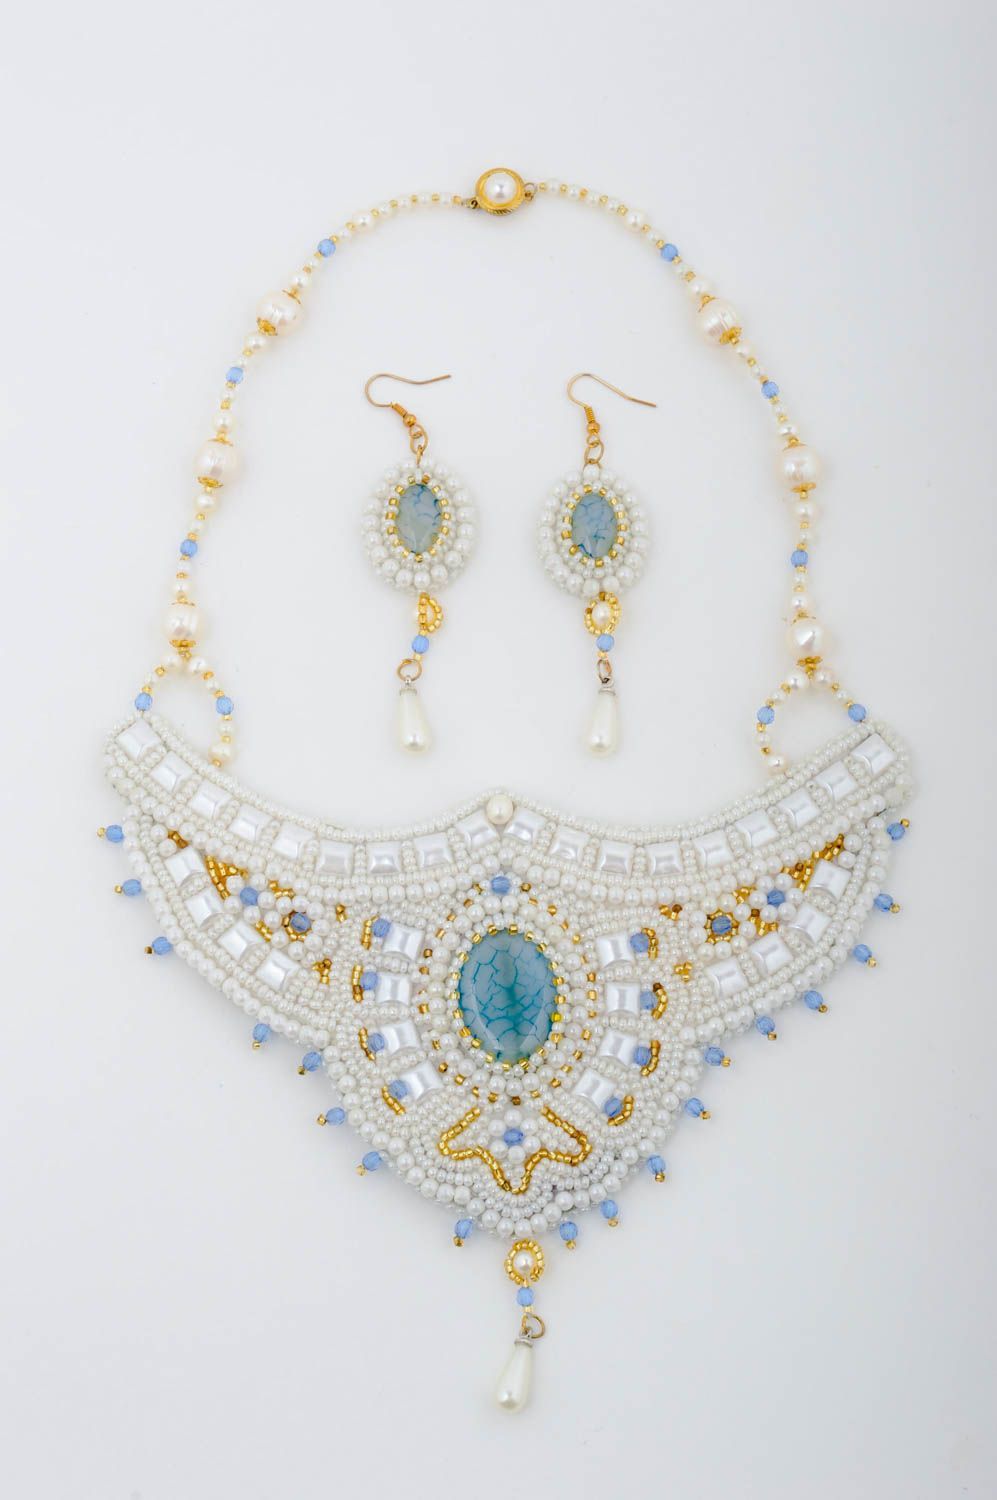 Handmade earrings designer pendant beaded accessory beads jewelry gift ideas photo 2